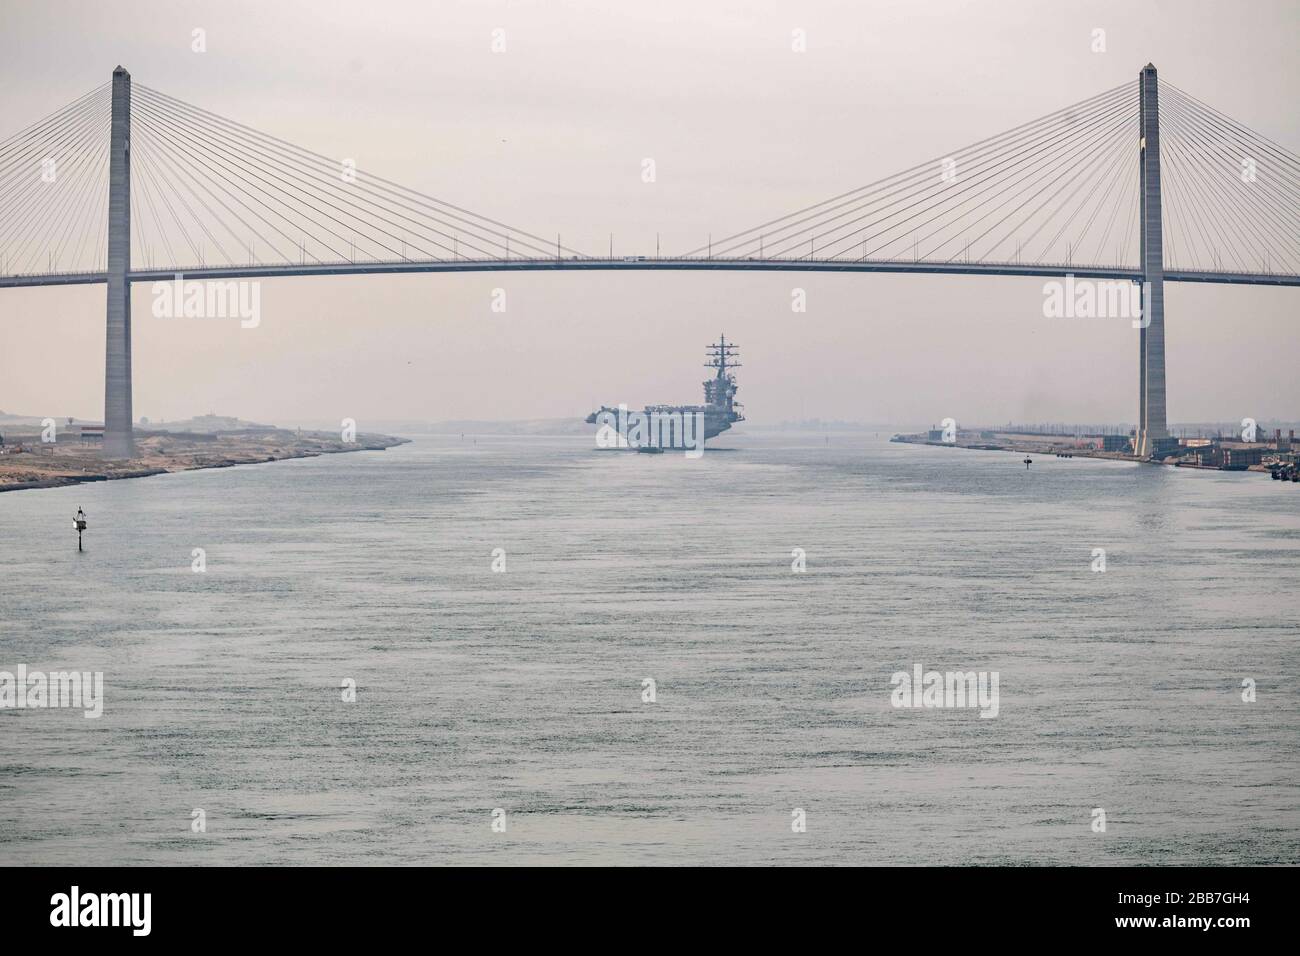 The U.S. Navy Nimitz-class aircraft carrier USS Dwight D. Eisenhower crosses under the Mubarak Peace Bridge as it transits the Suez Canal March 9, 2020 in El Qantara, Egypt. Stock Photo